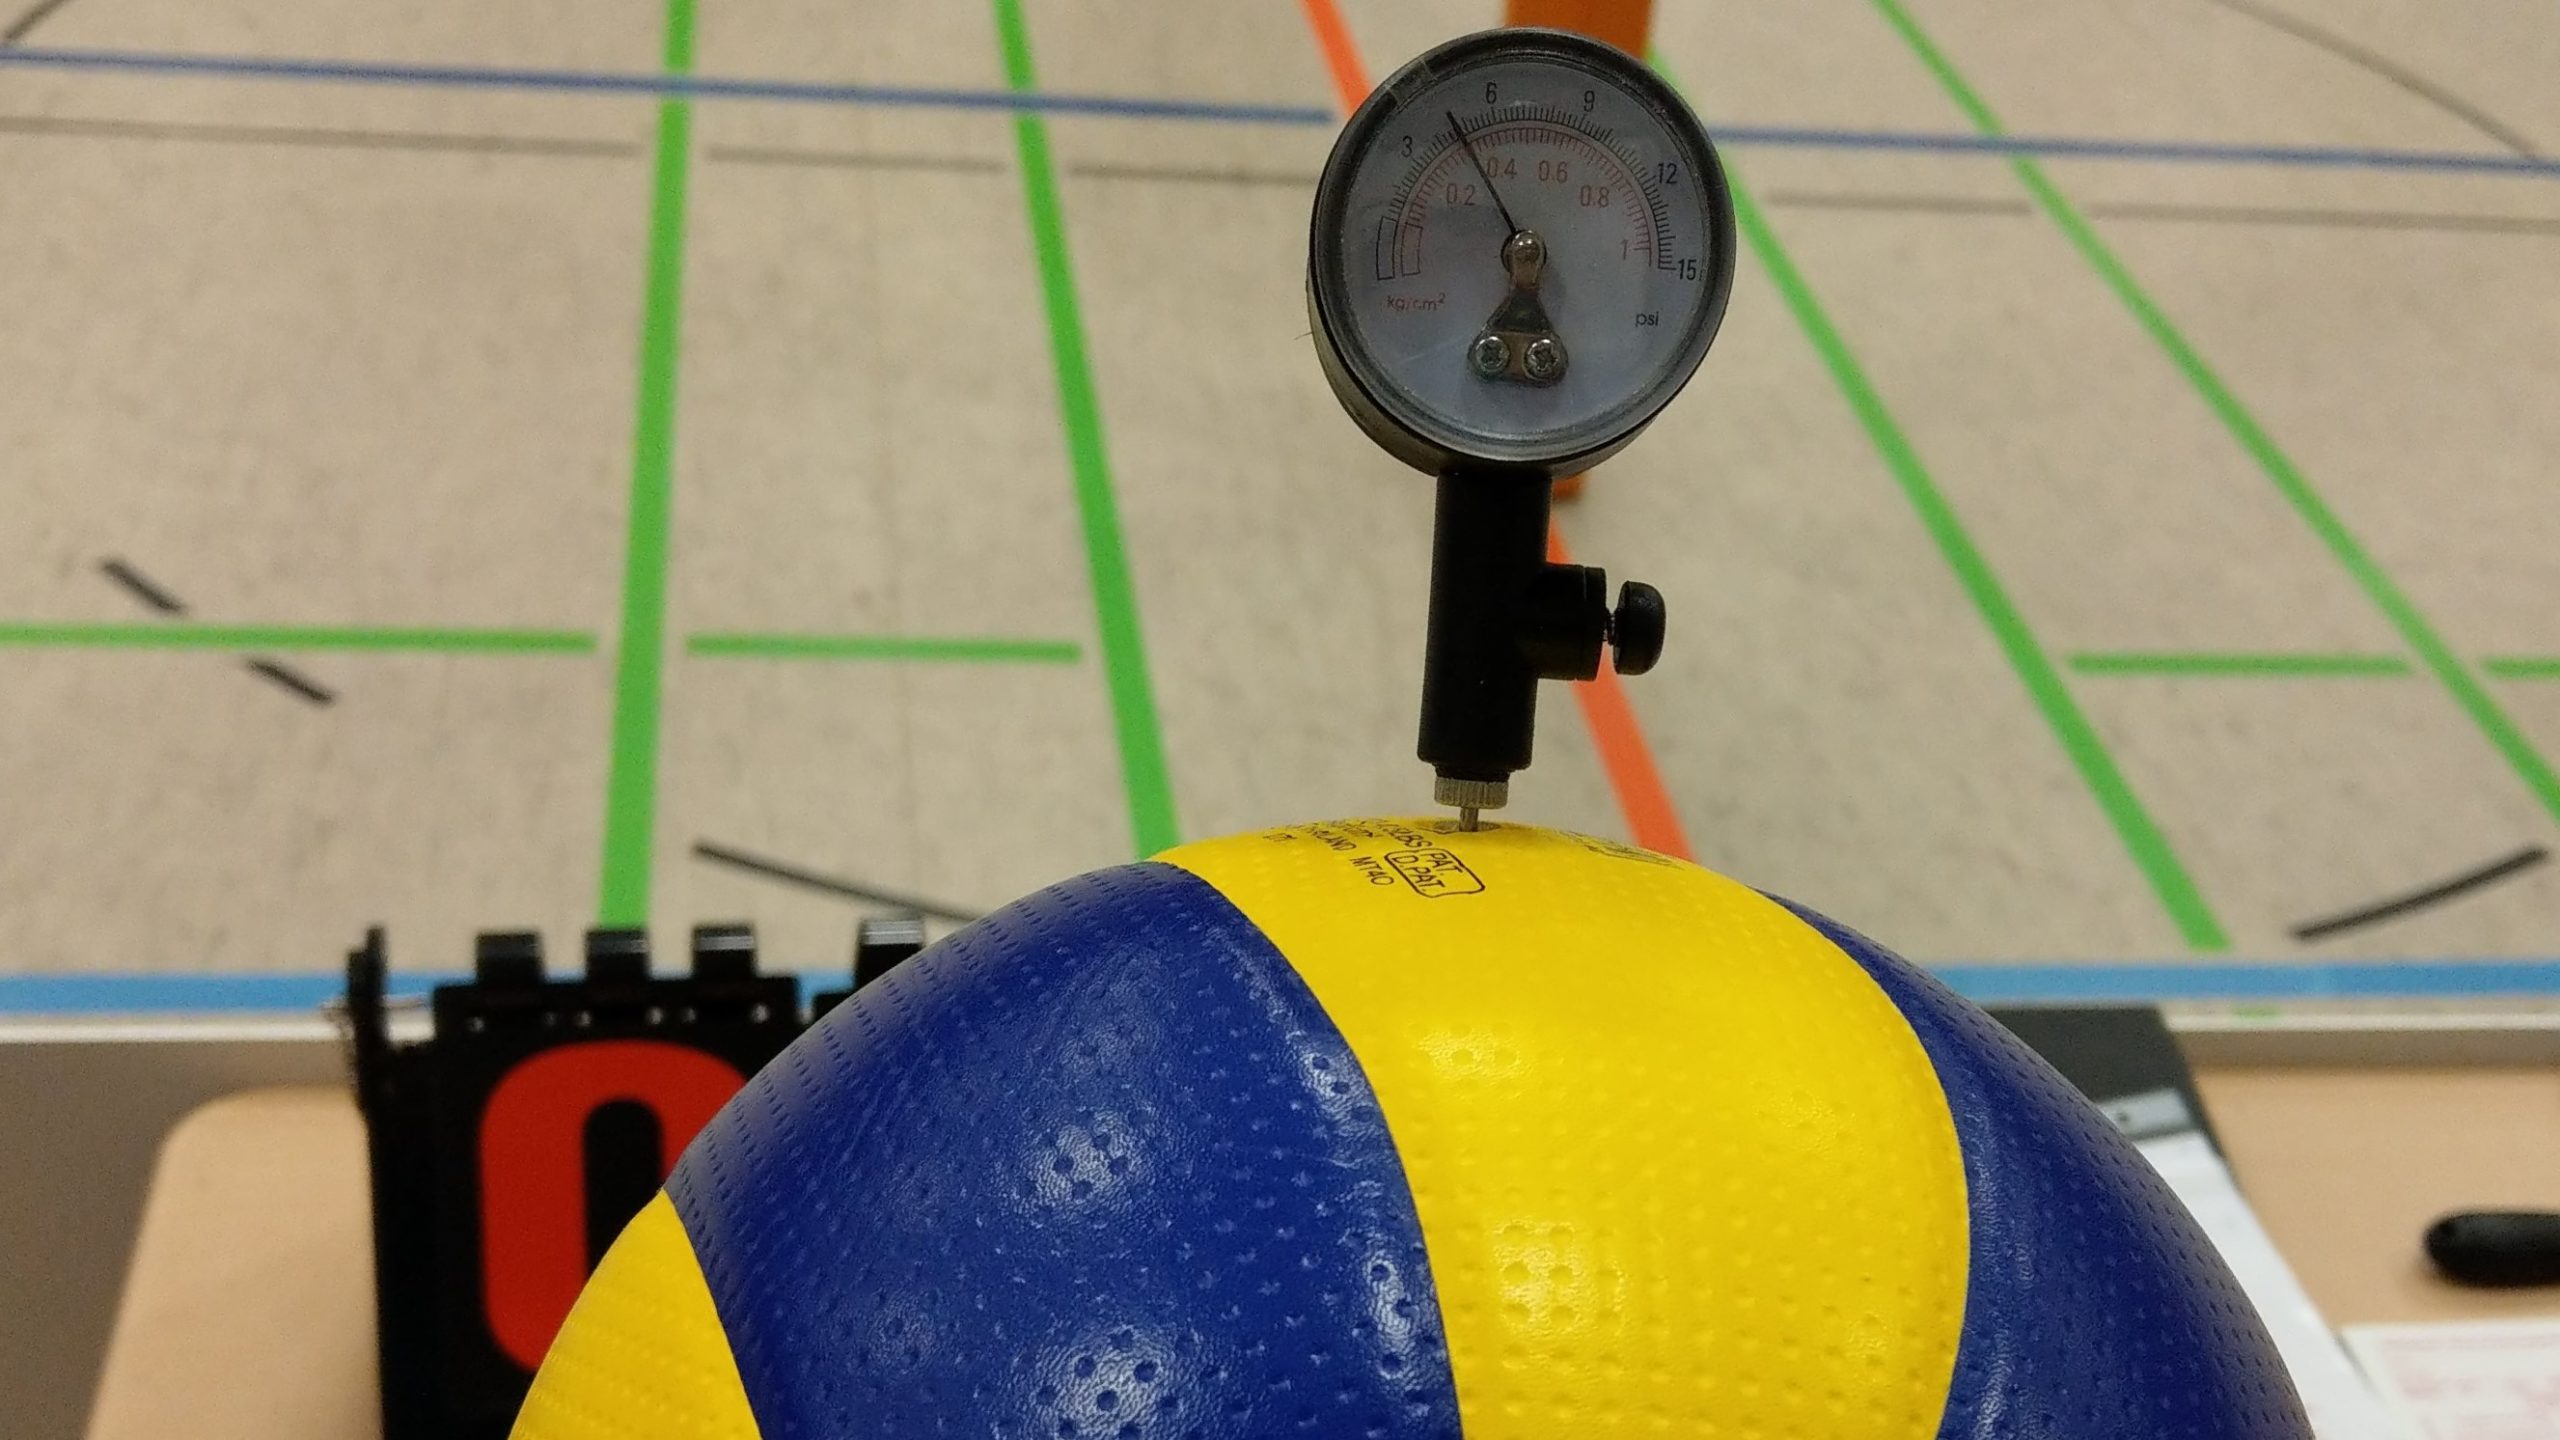 Luftdruckmesser Fußball Bälle Ballpumpen Ball Manometer Barometer Tool für Basketball Fußball Volleyball